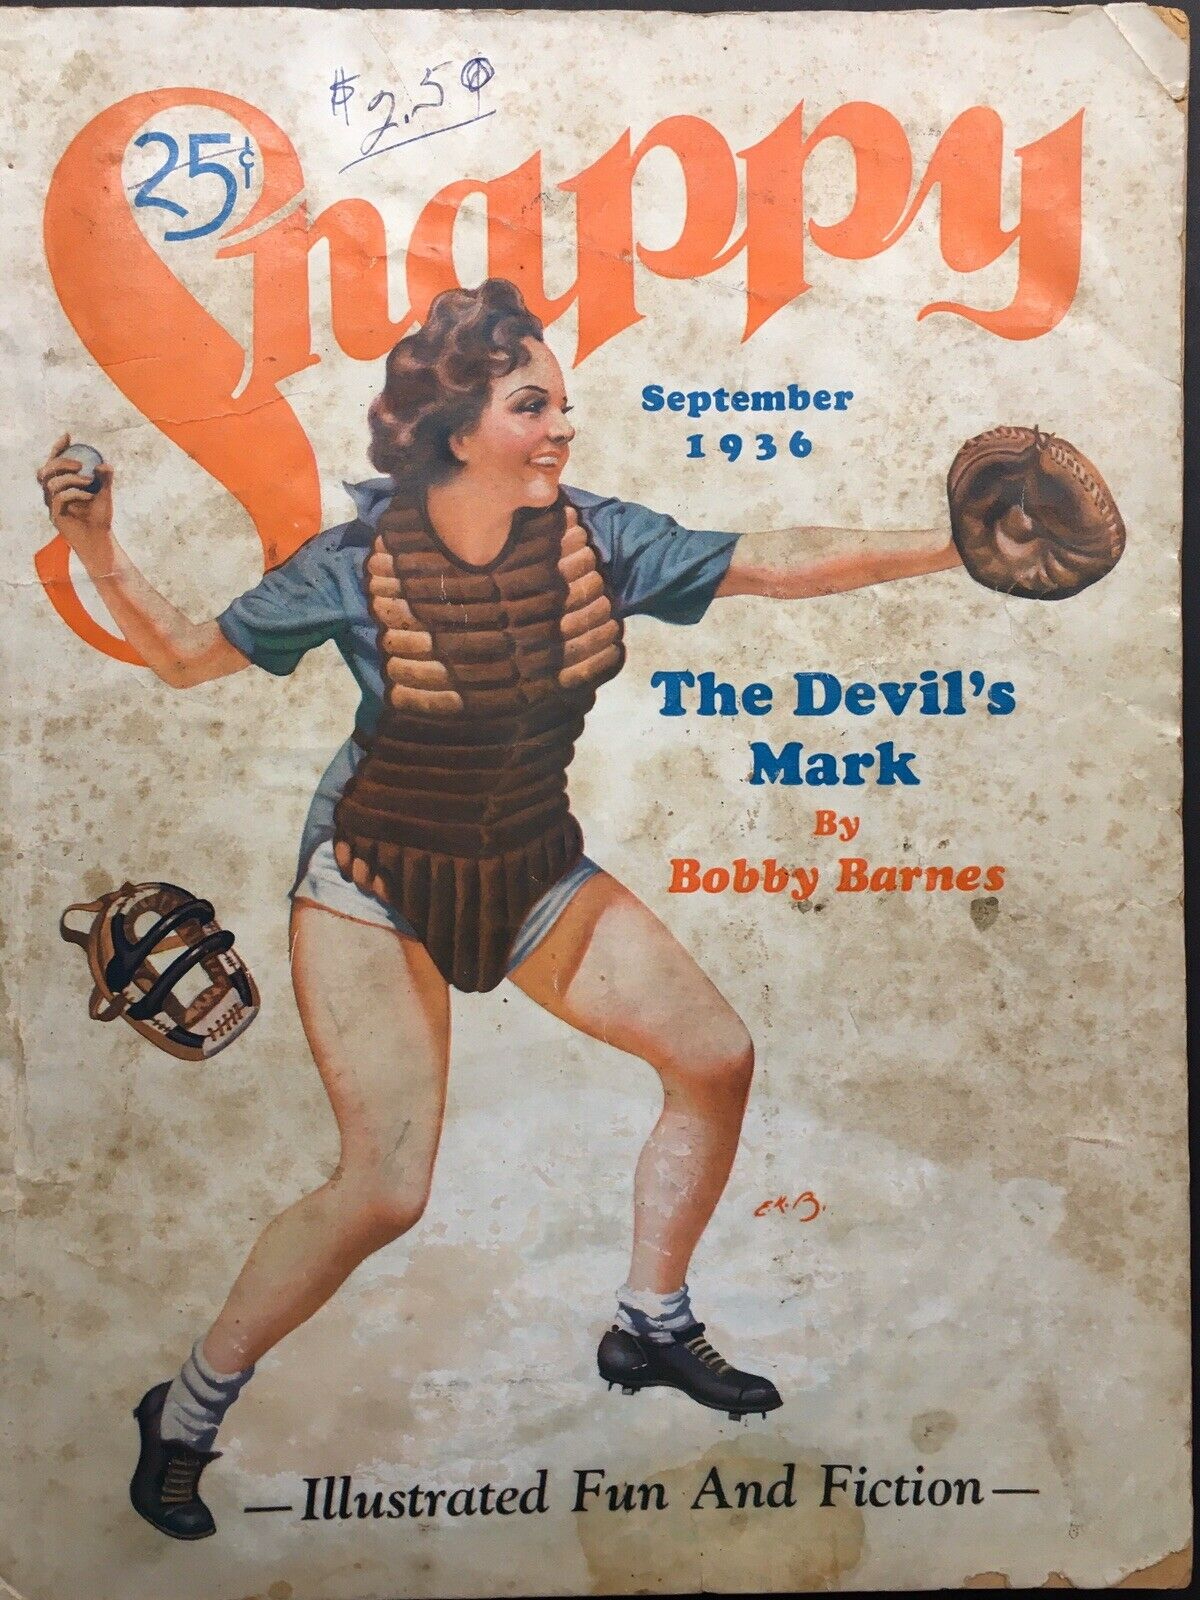 Snappy - September 1936